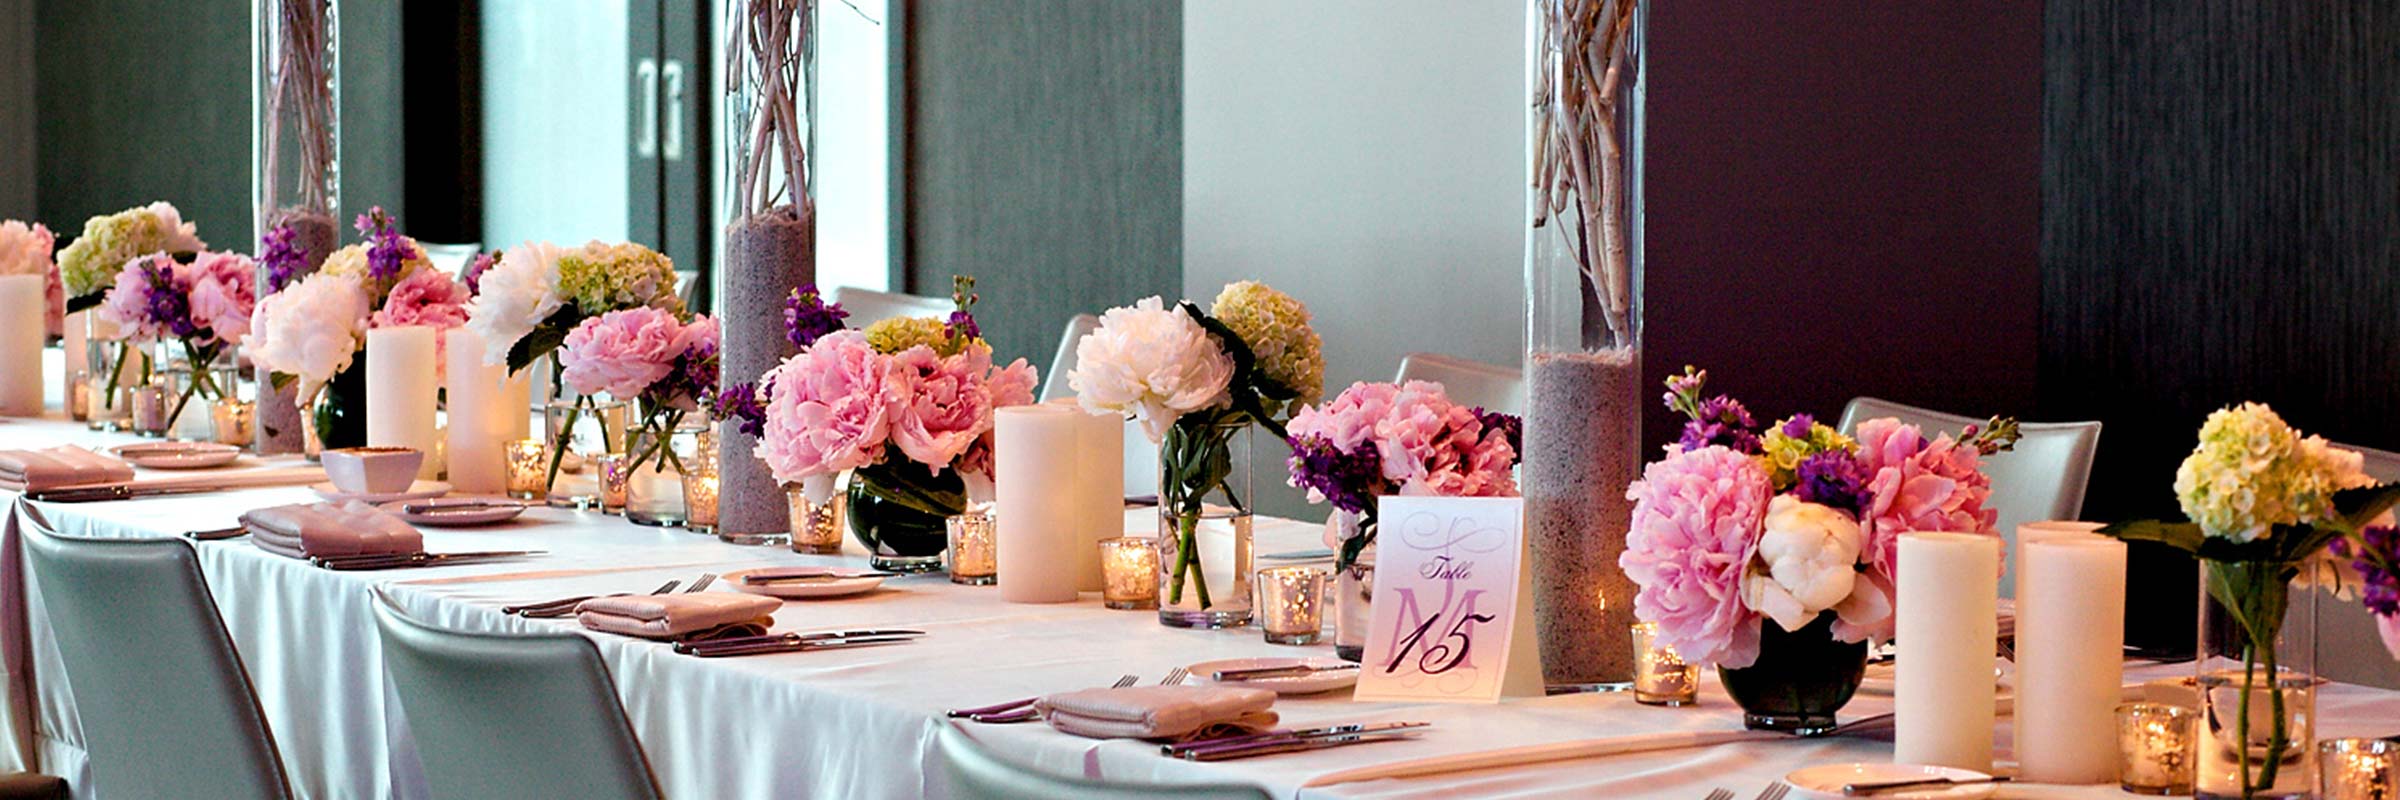 Wedding Reception Long Table Fresh Flowers